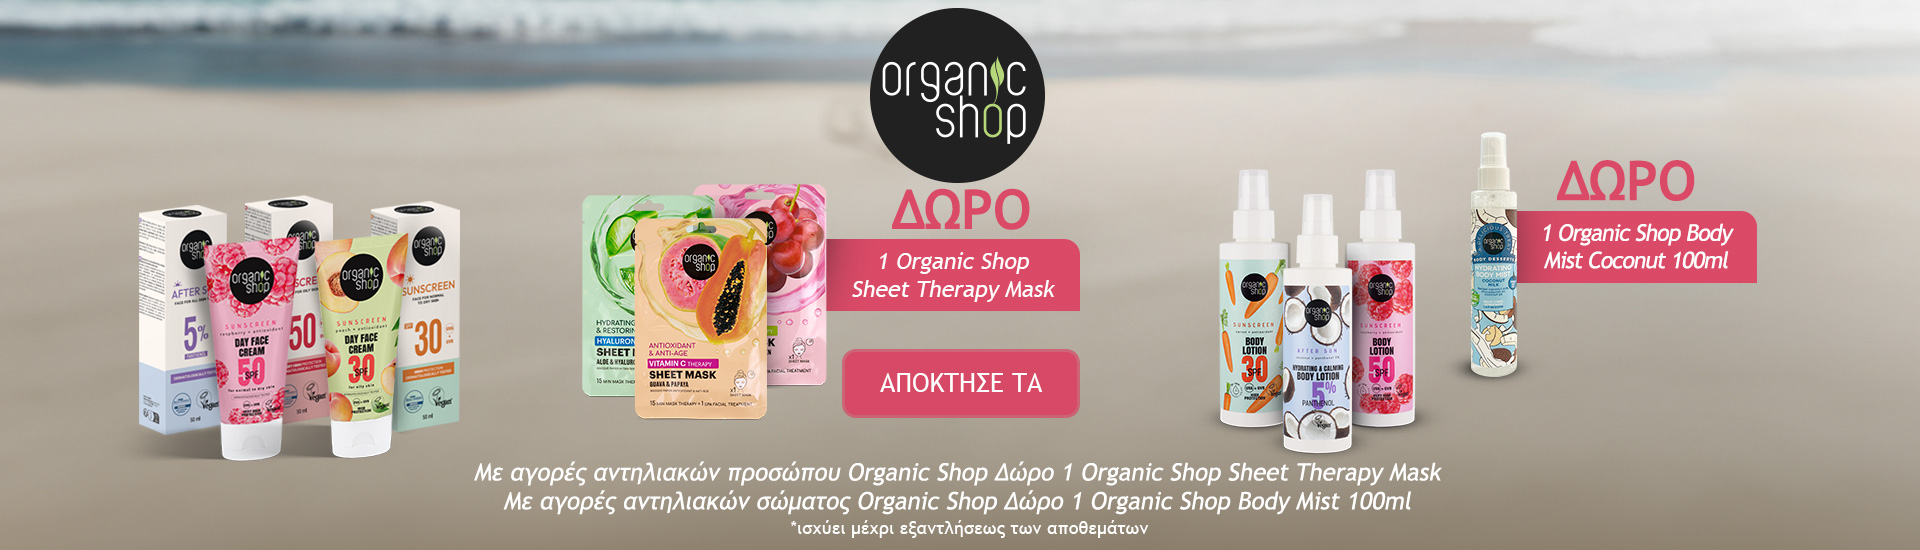 Organic Shop Sunscreens